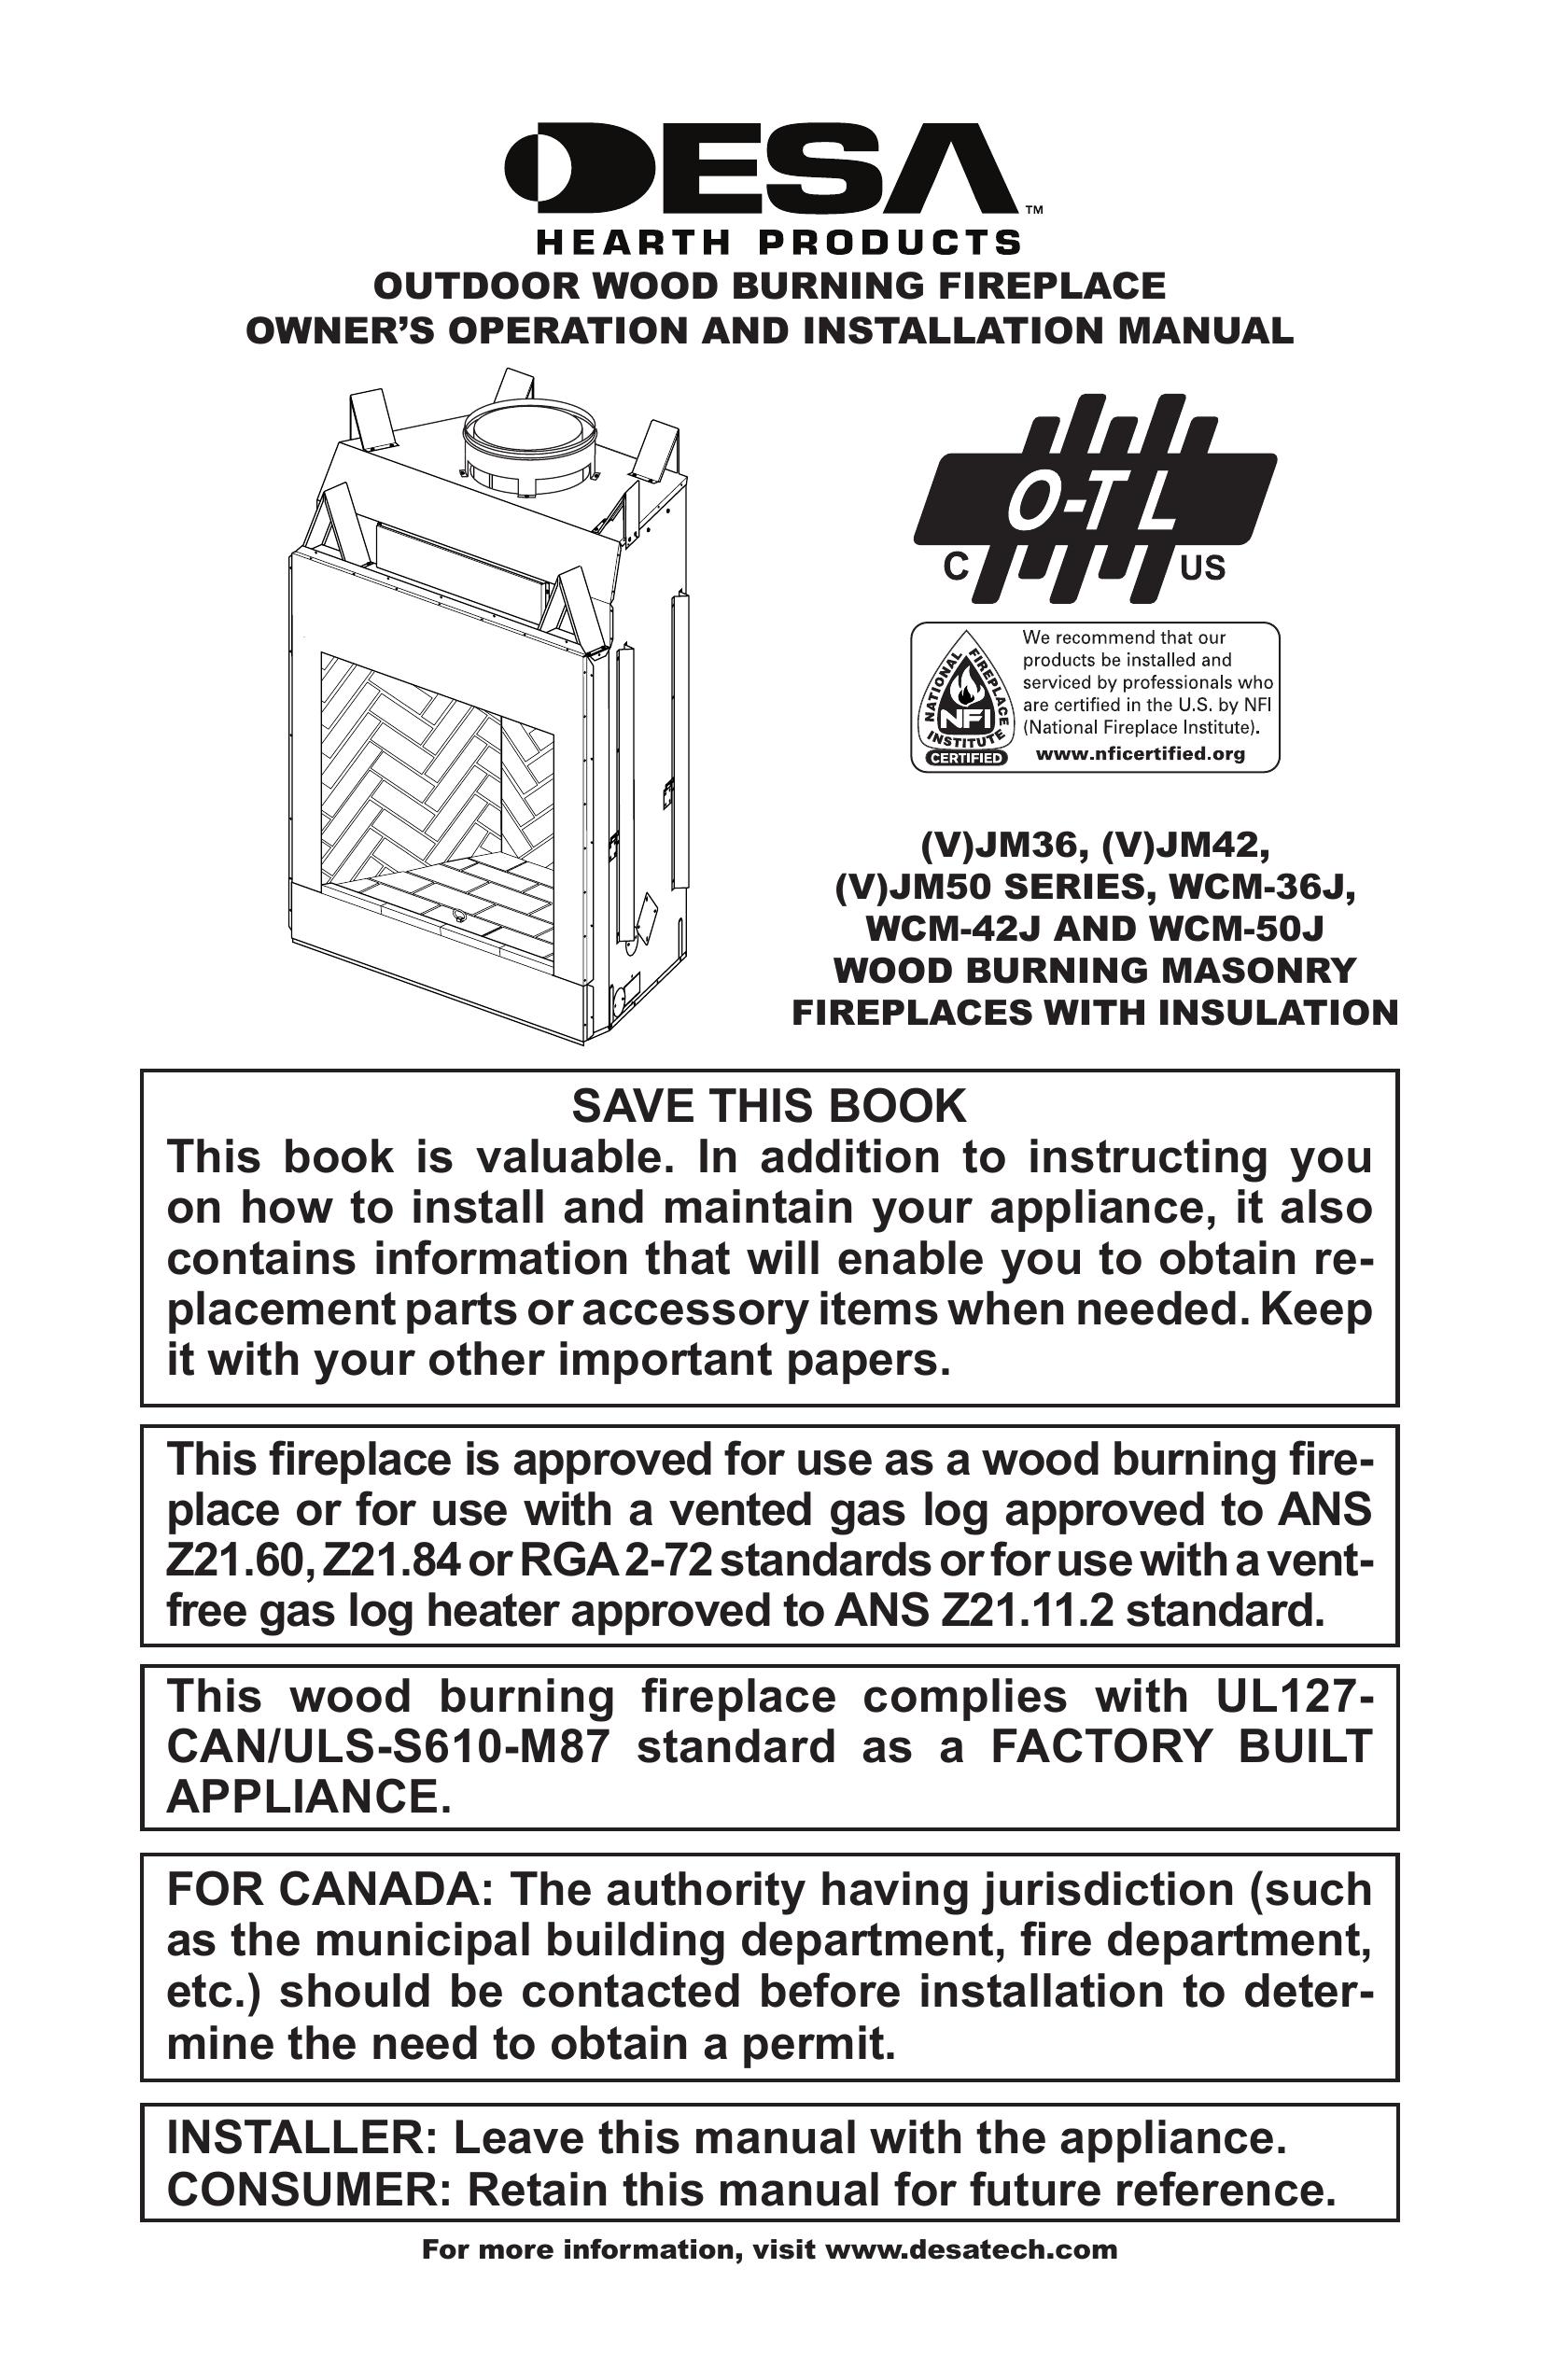 Desa (V)JM50 SERIES Outdoor Fireplace User Manual